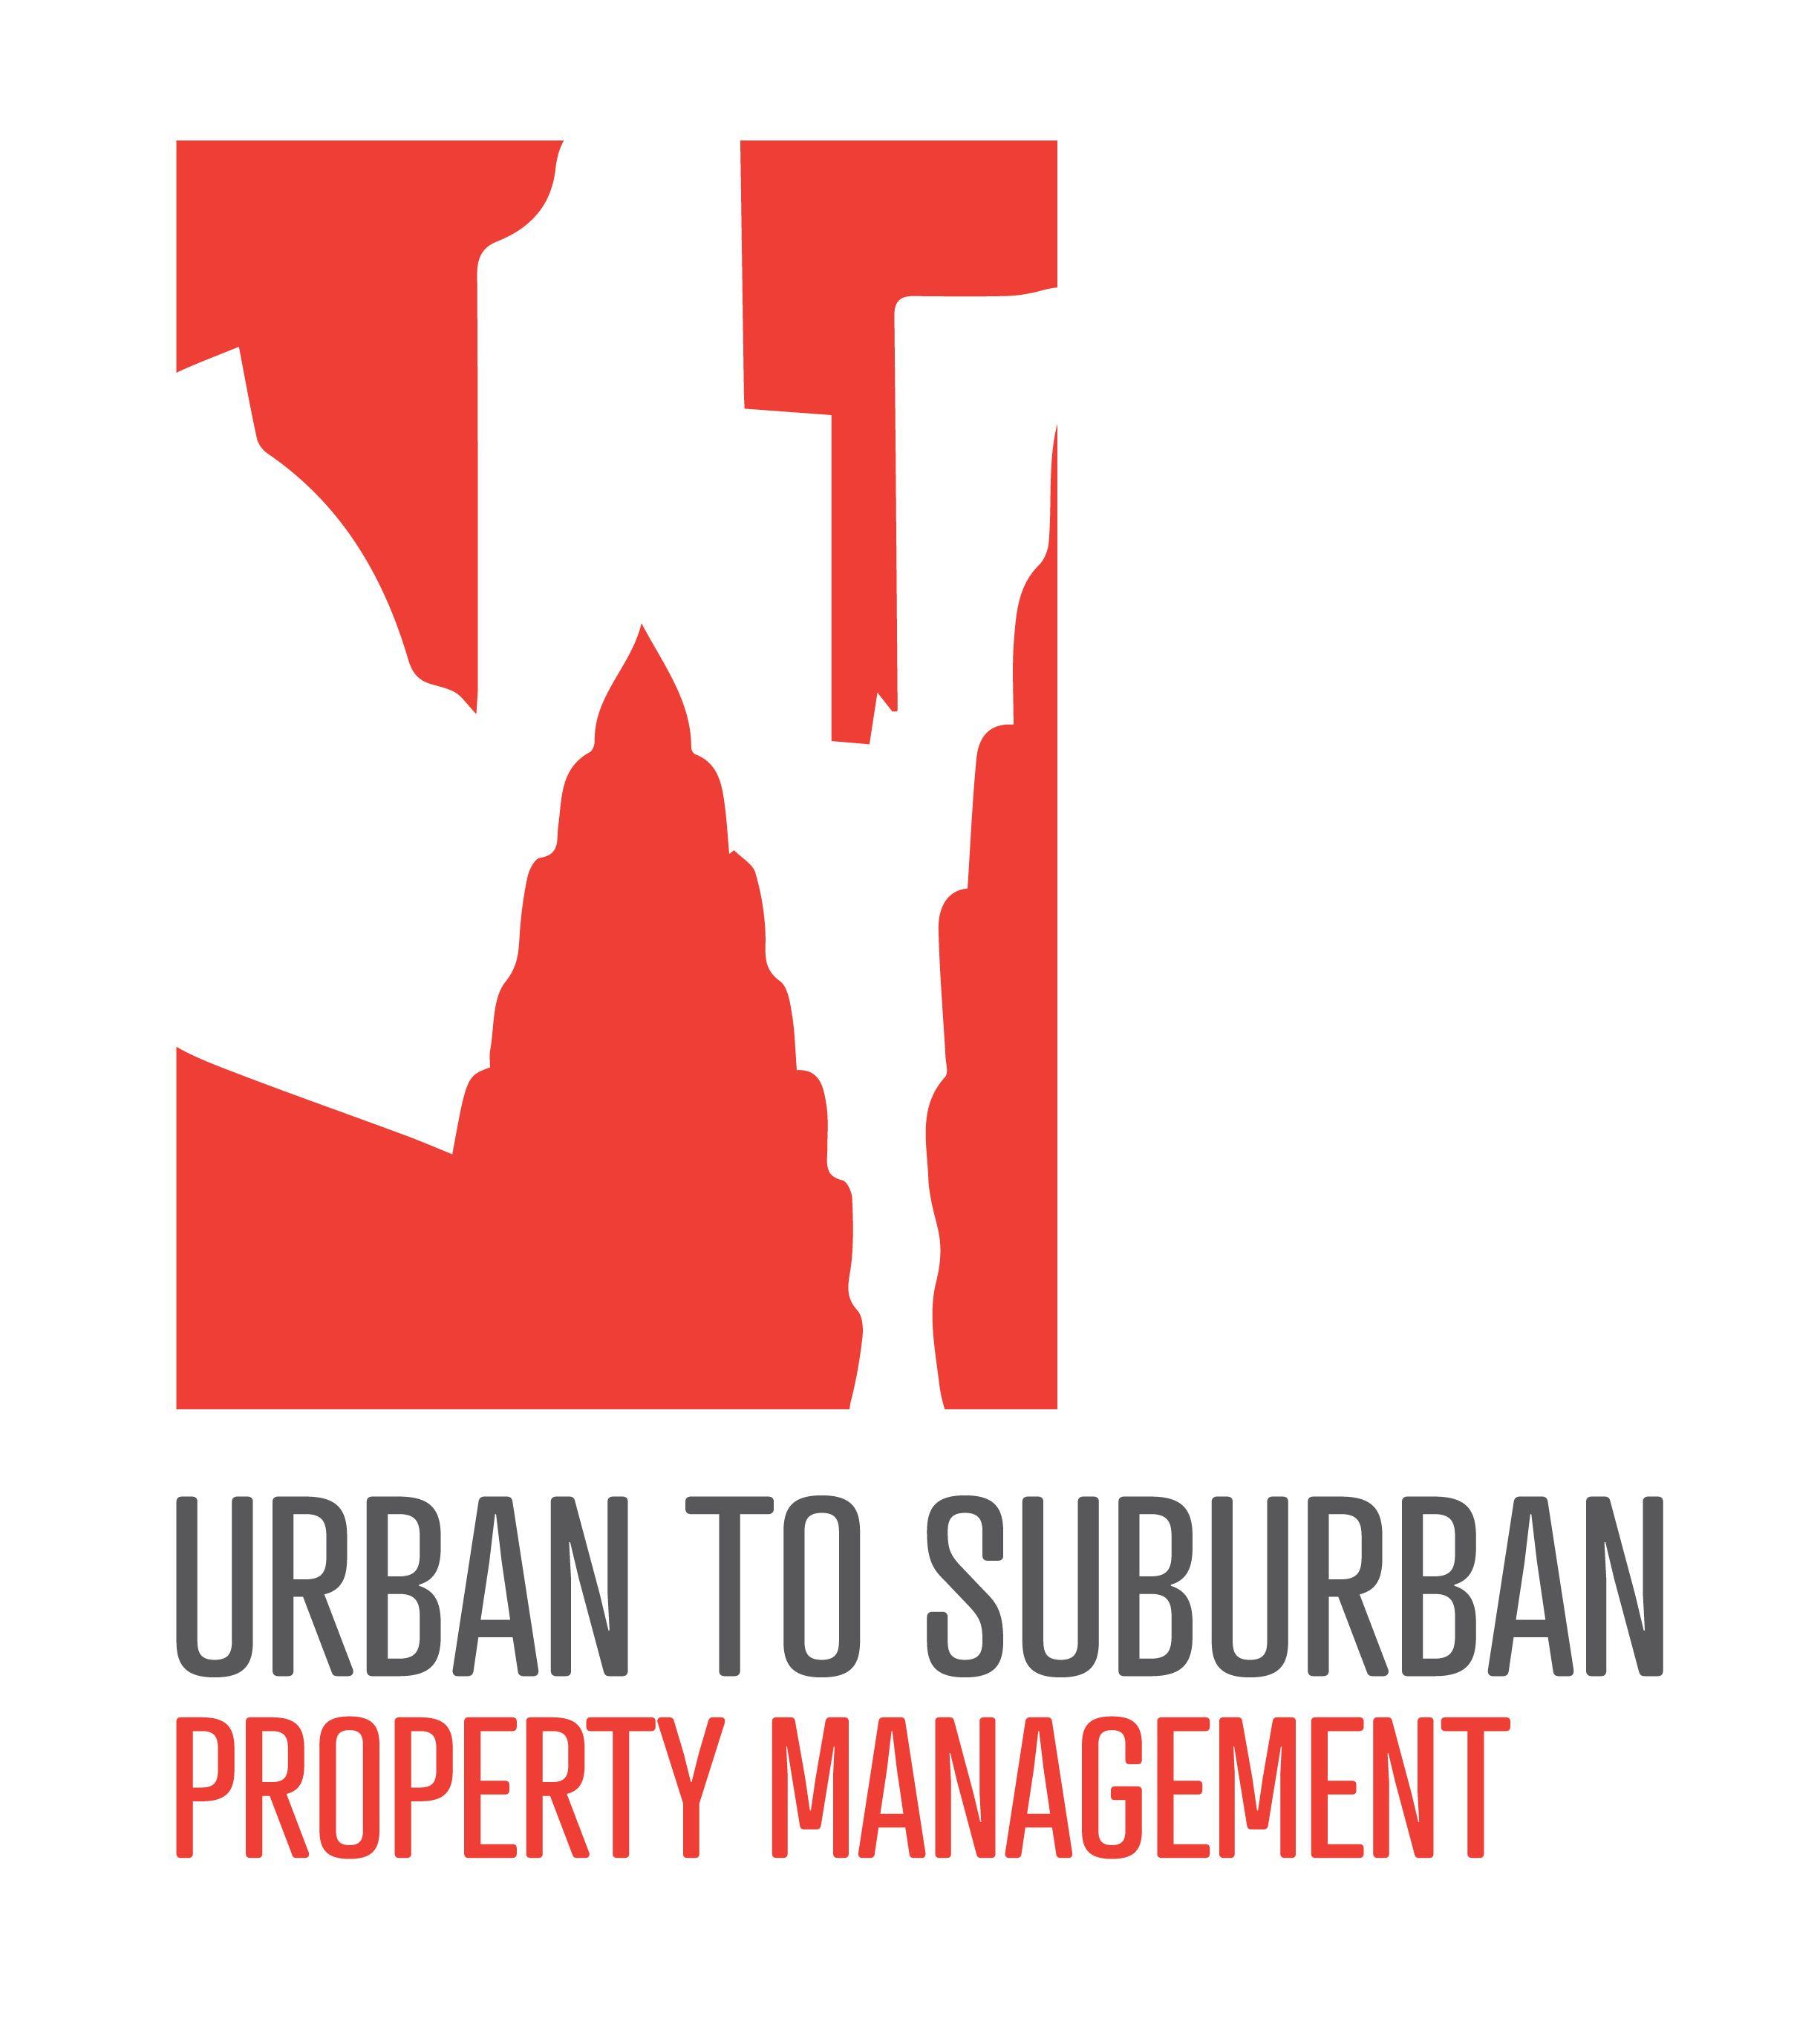 Suberban Logo - URBAN TO SUBURBAN: LOGO DESIGN | Kara Berhow